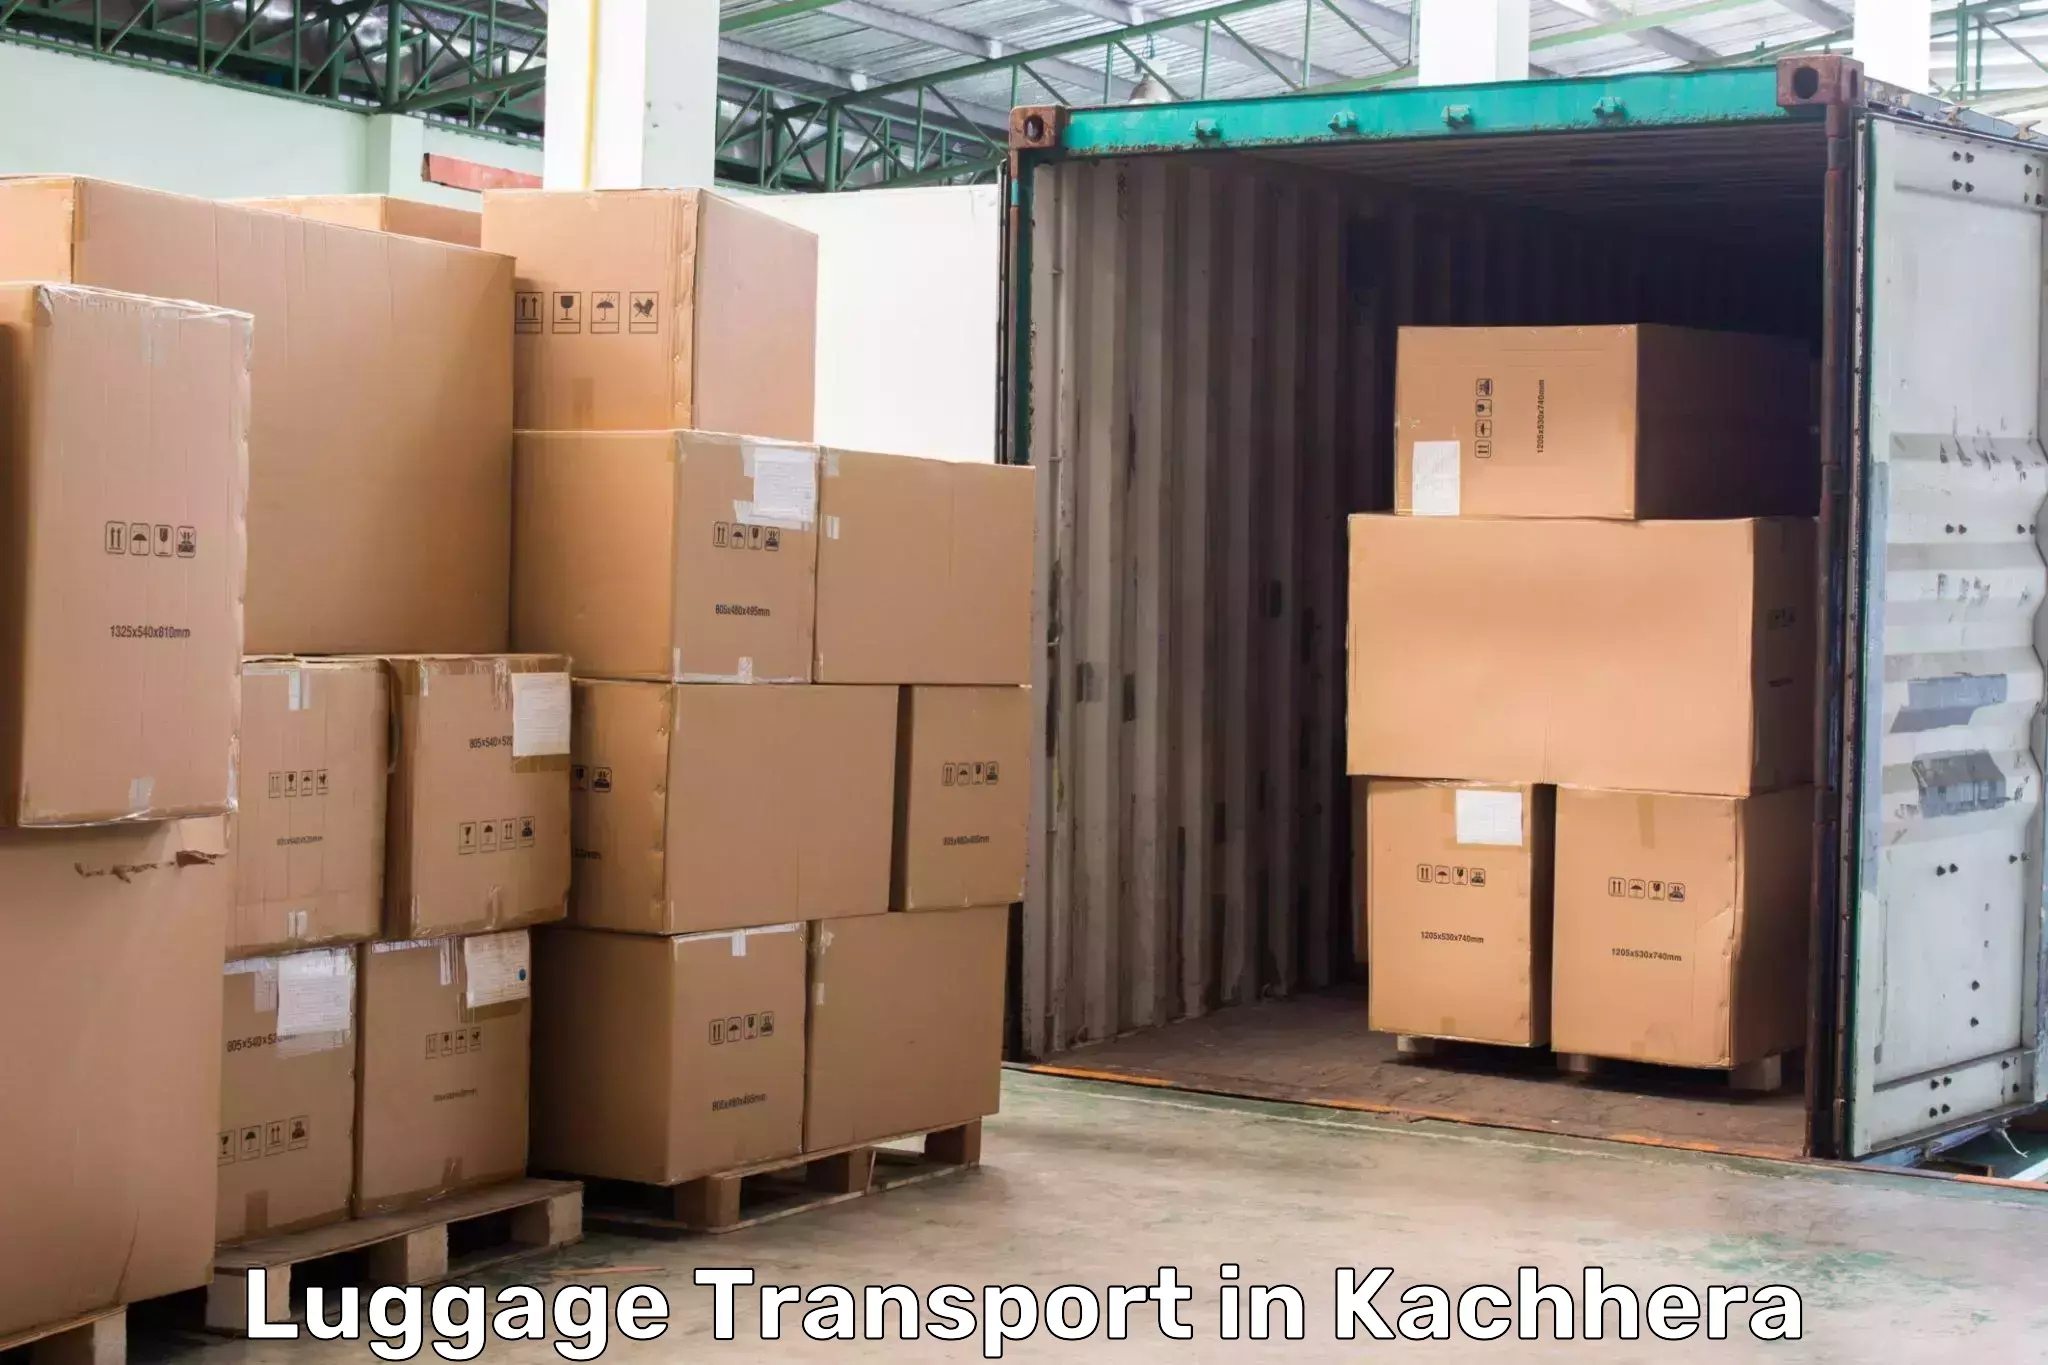 Business luggage transport in Kachhera